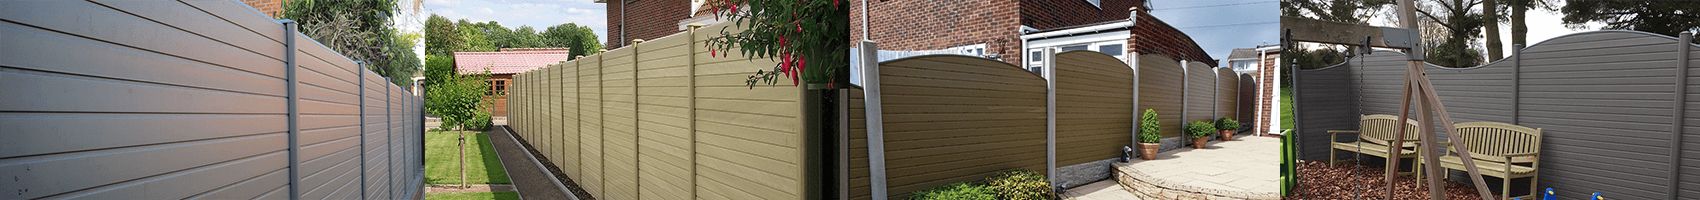 110mm x 90mm PVC Composite Fence Post Walnut 2.4m